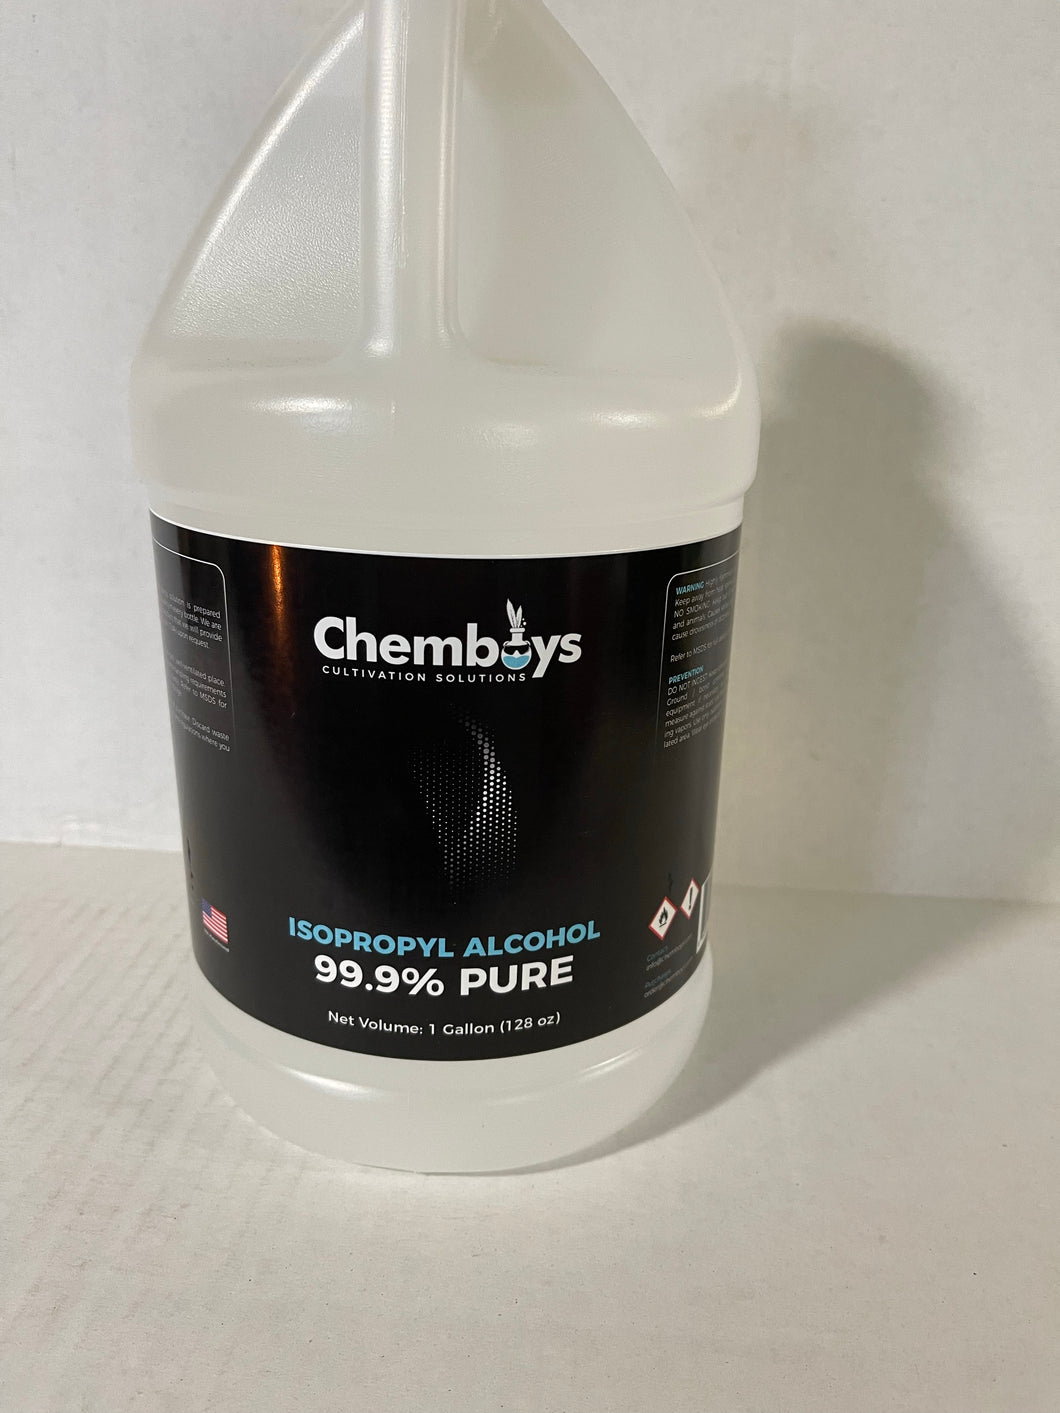 Chemboys Isopropyl Alcohol 99.9%